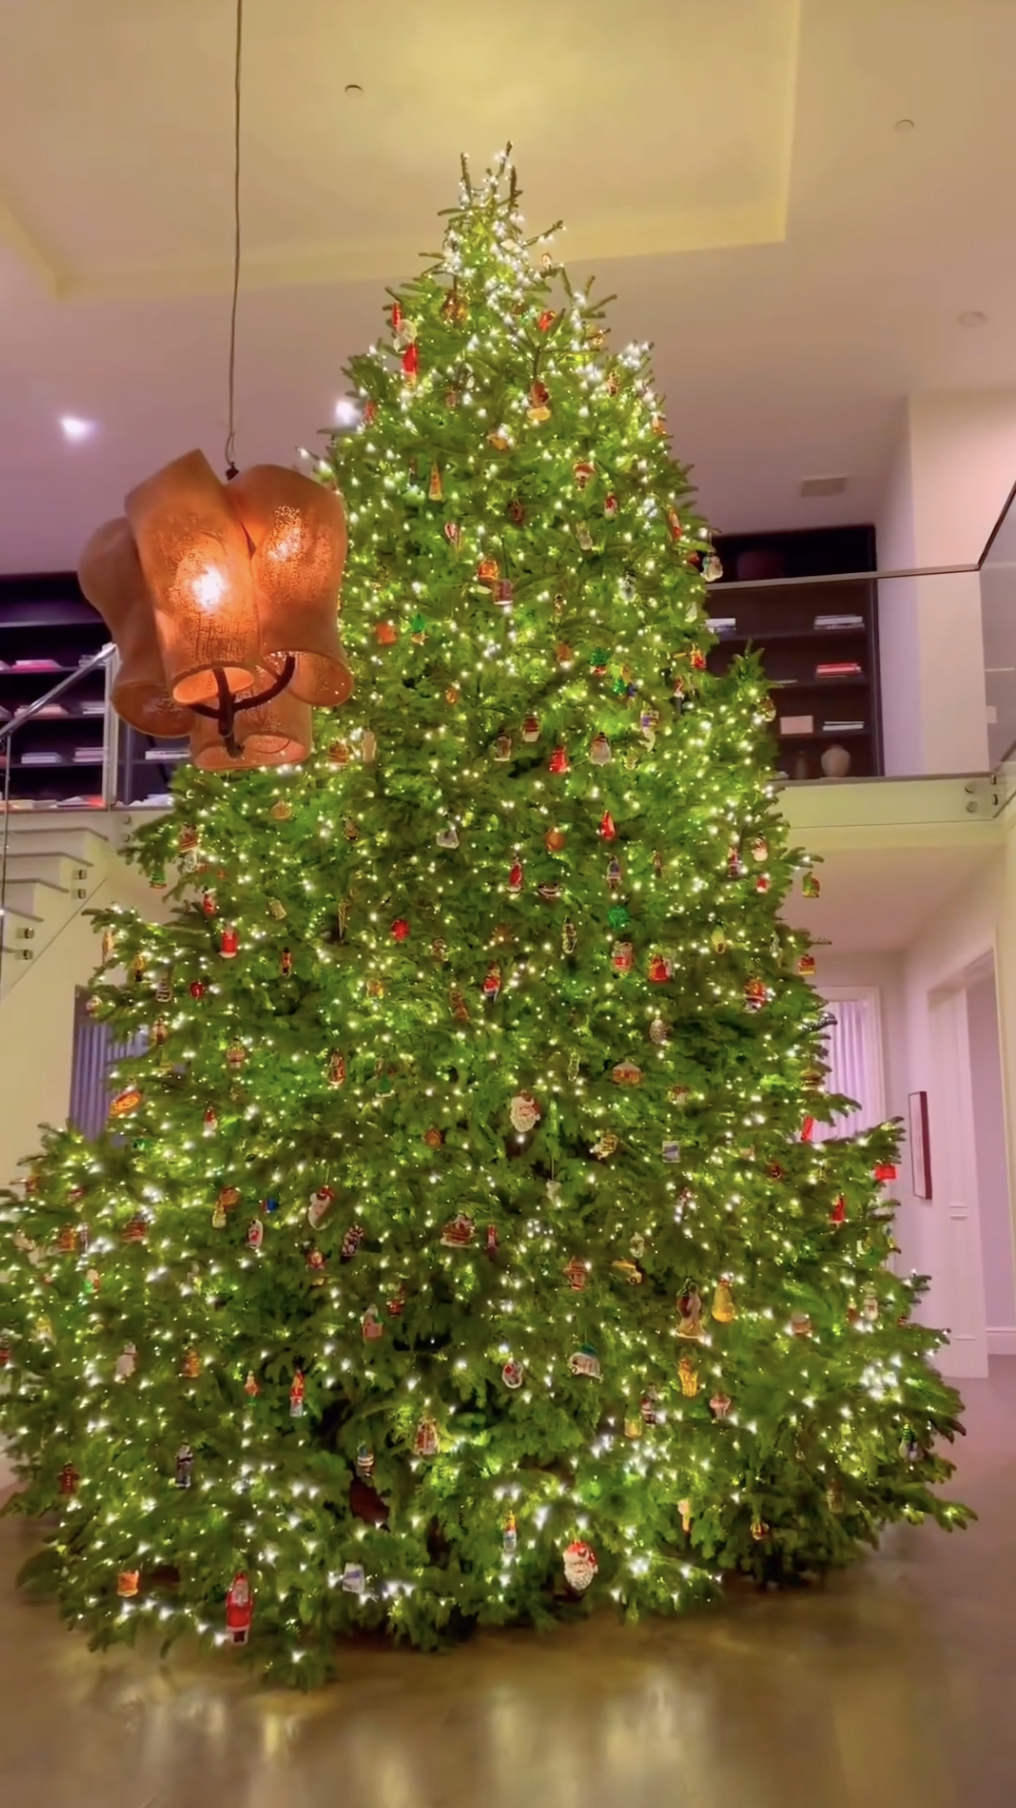 A short video showed revealed Kylie Jenner's Christmas tree